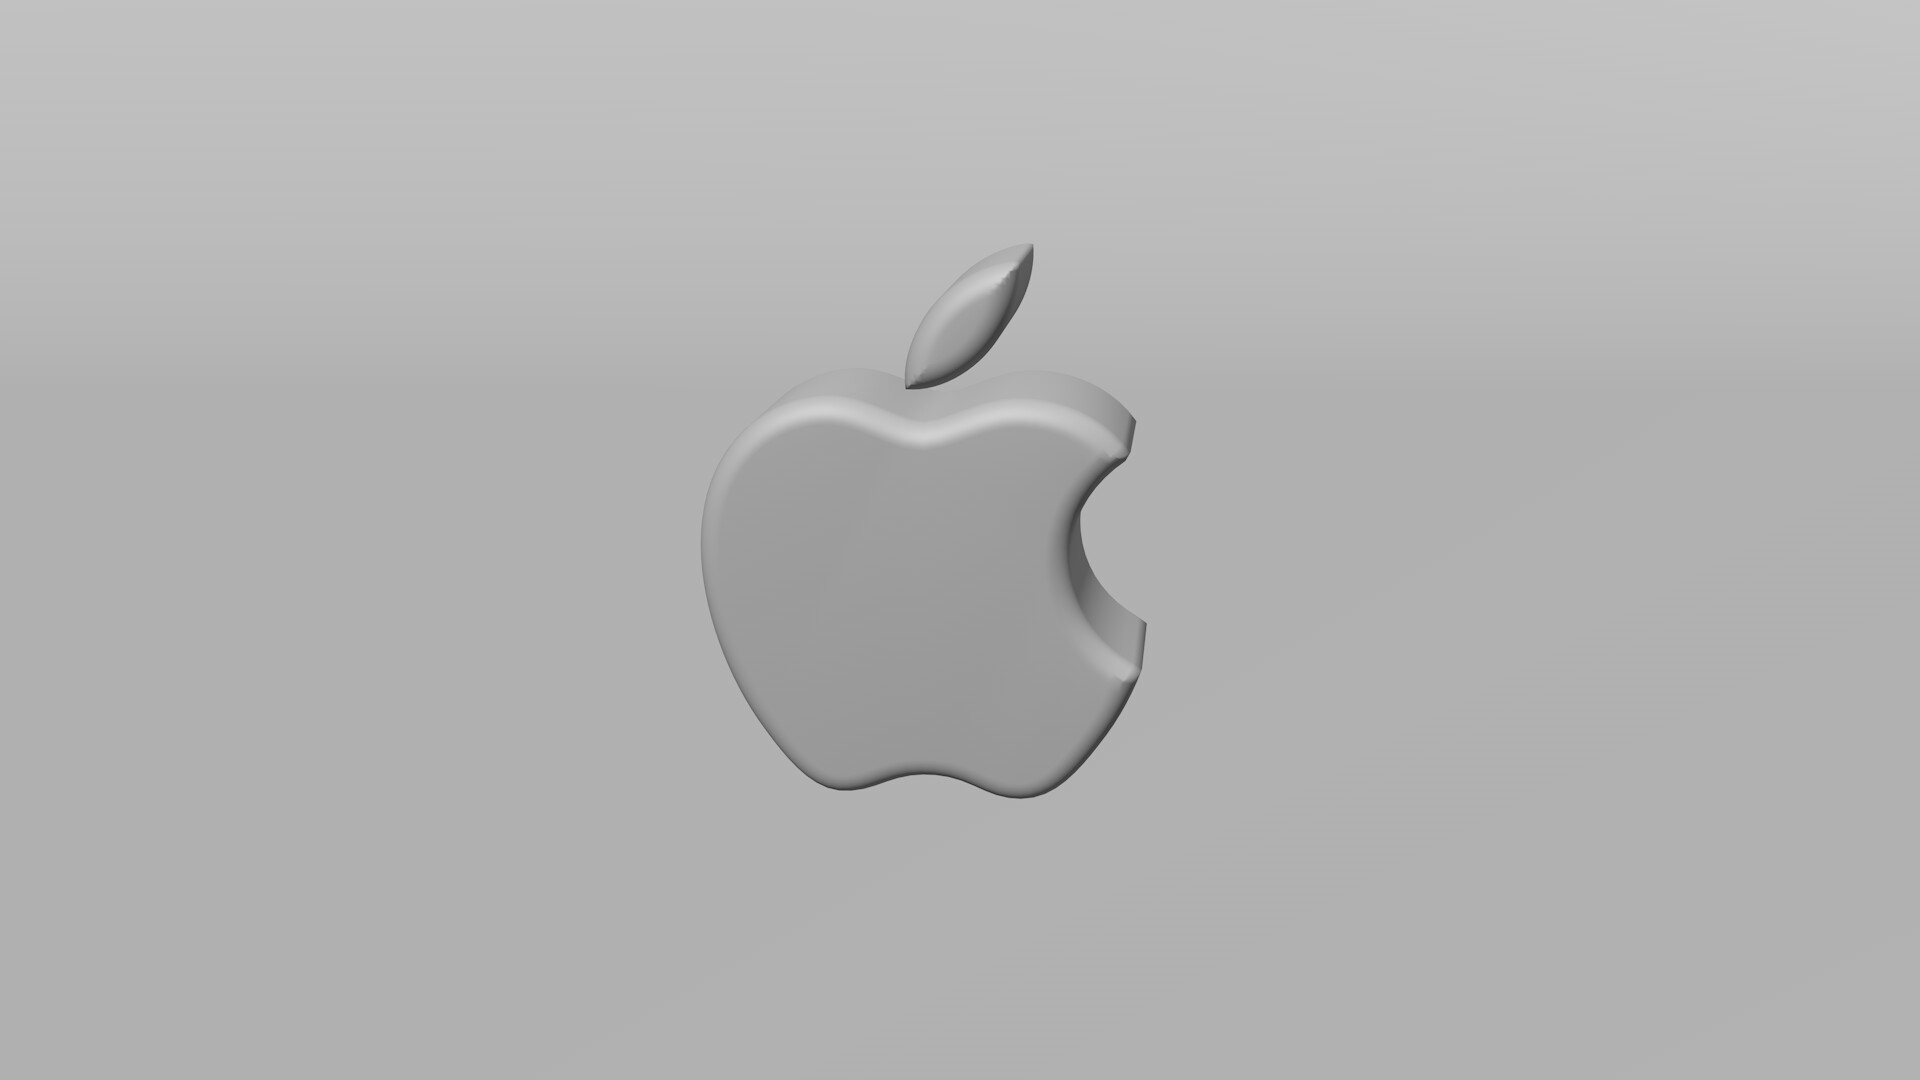 ArtStation - Apple logo animation